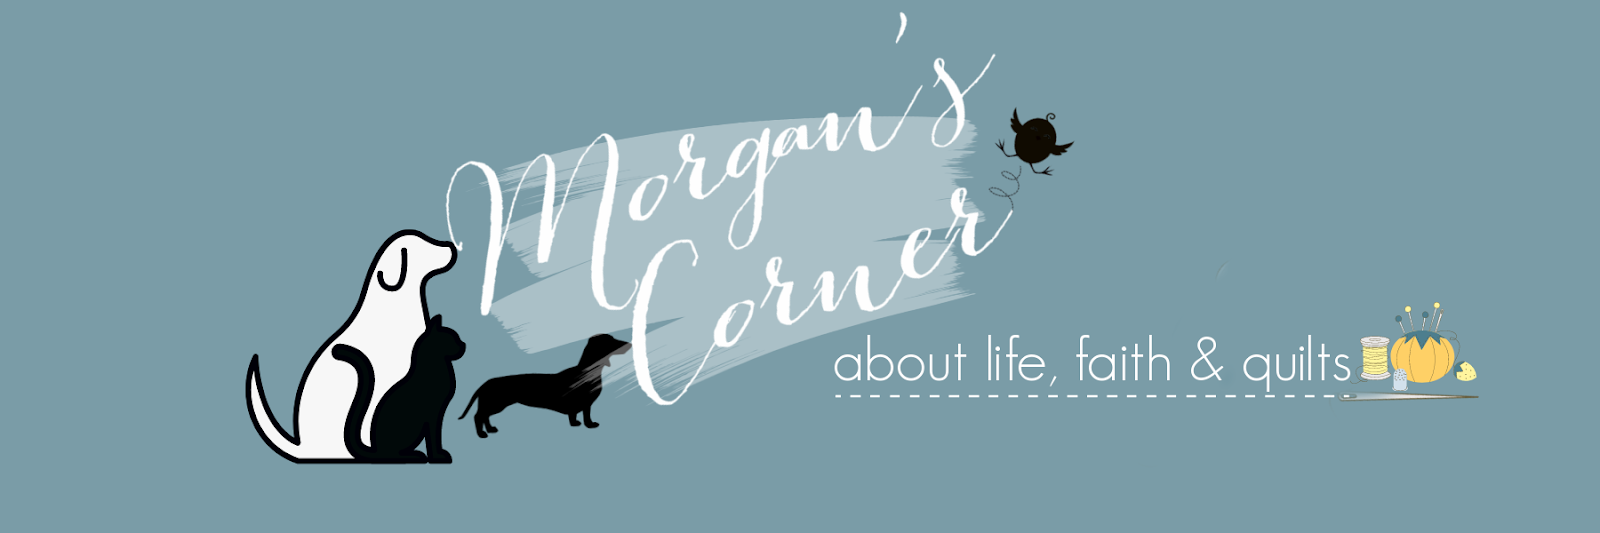 Morgan's Corner